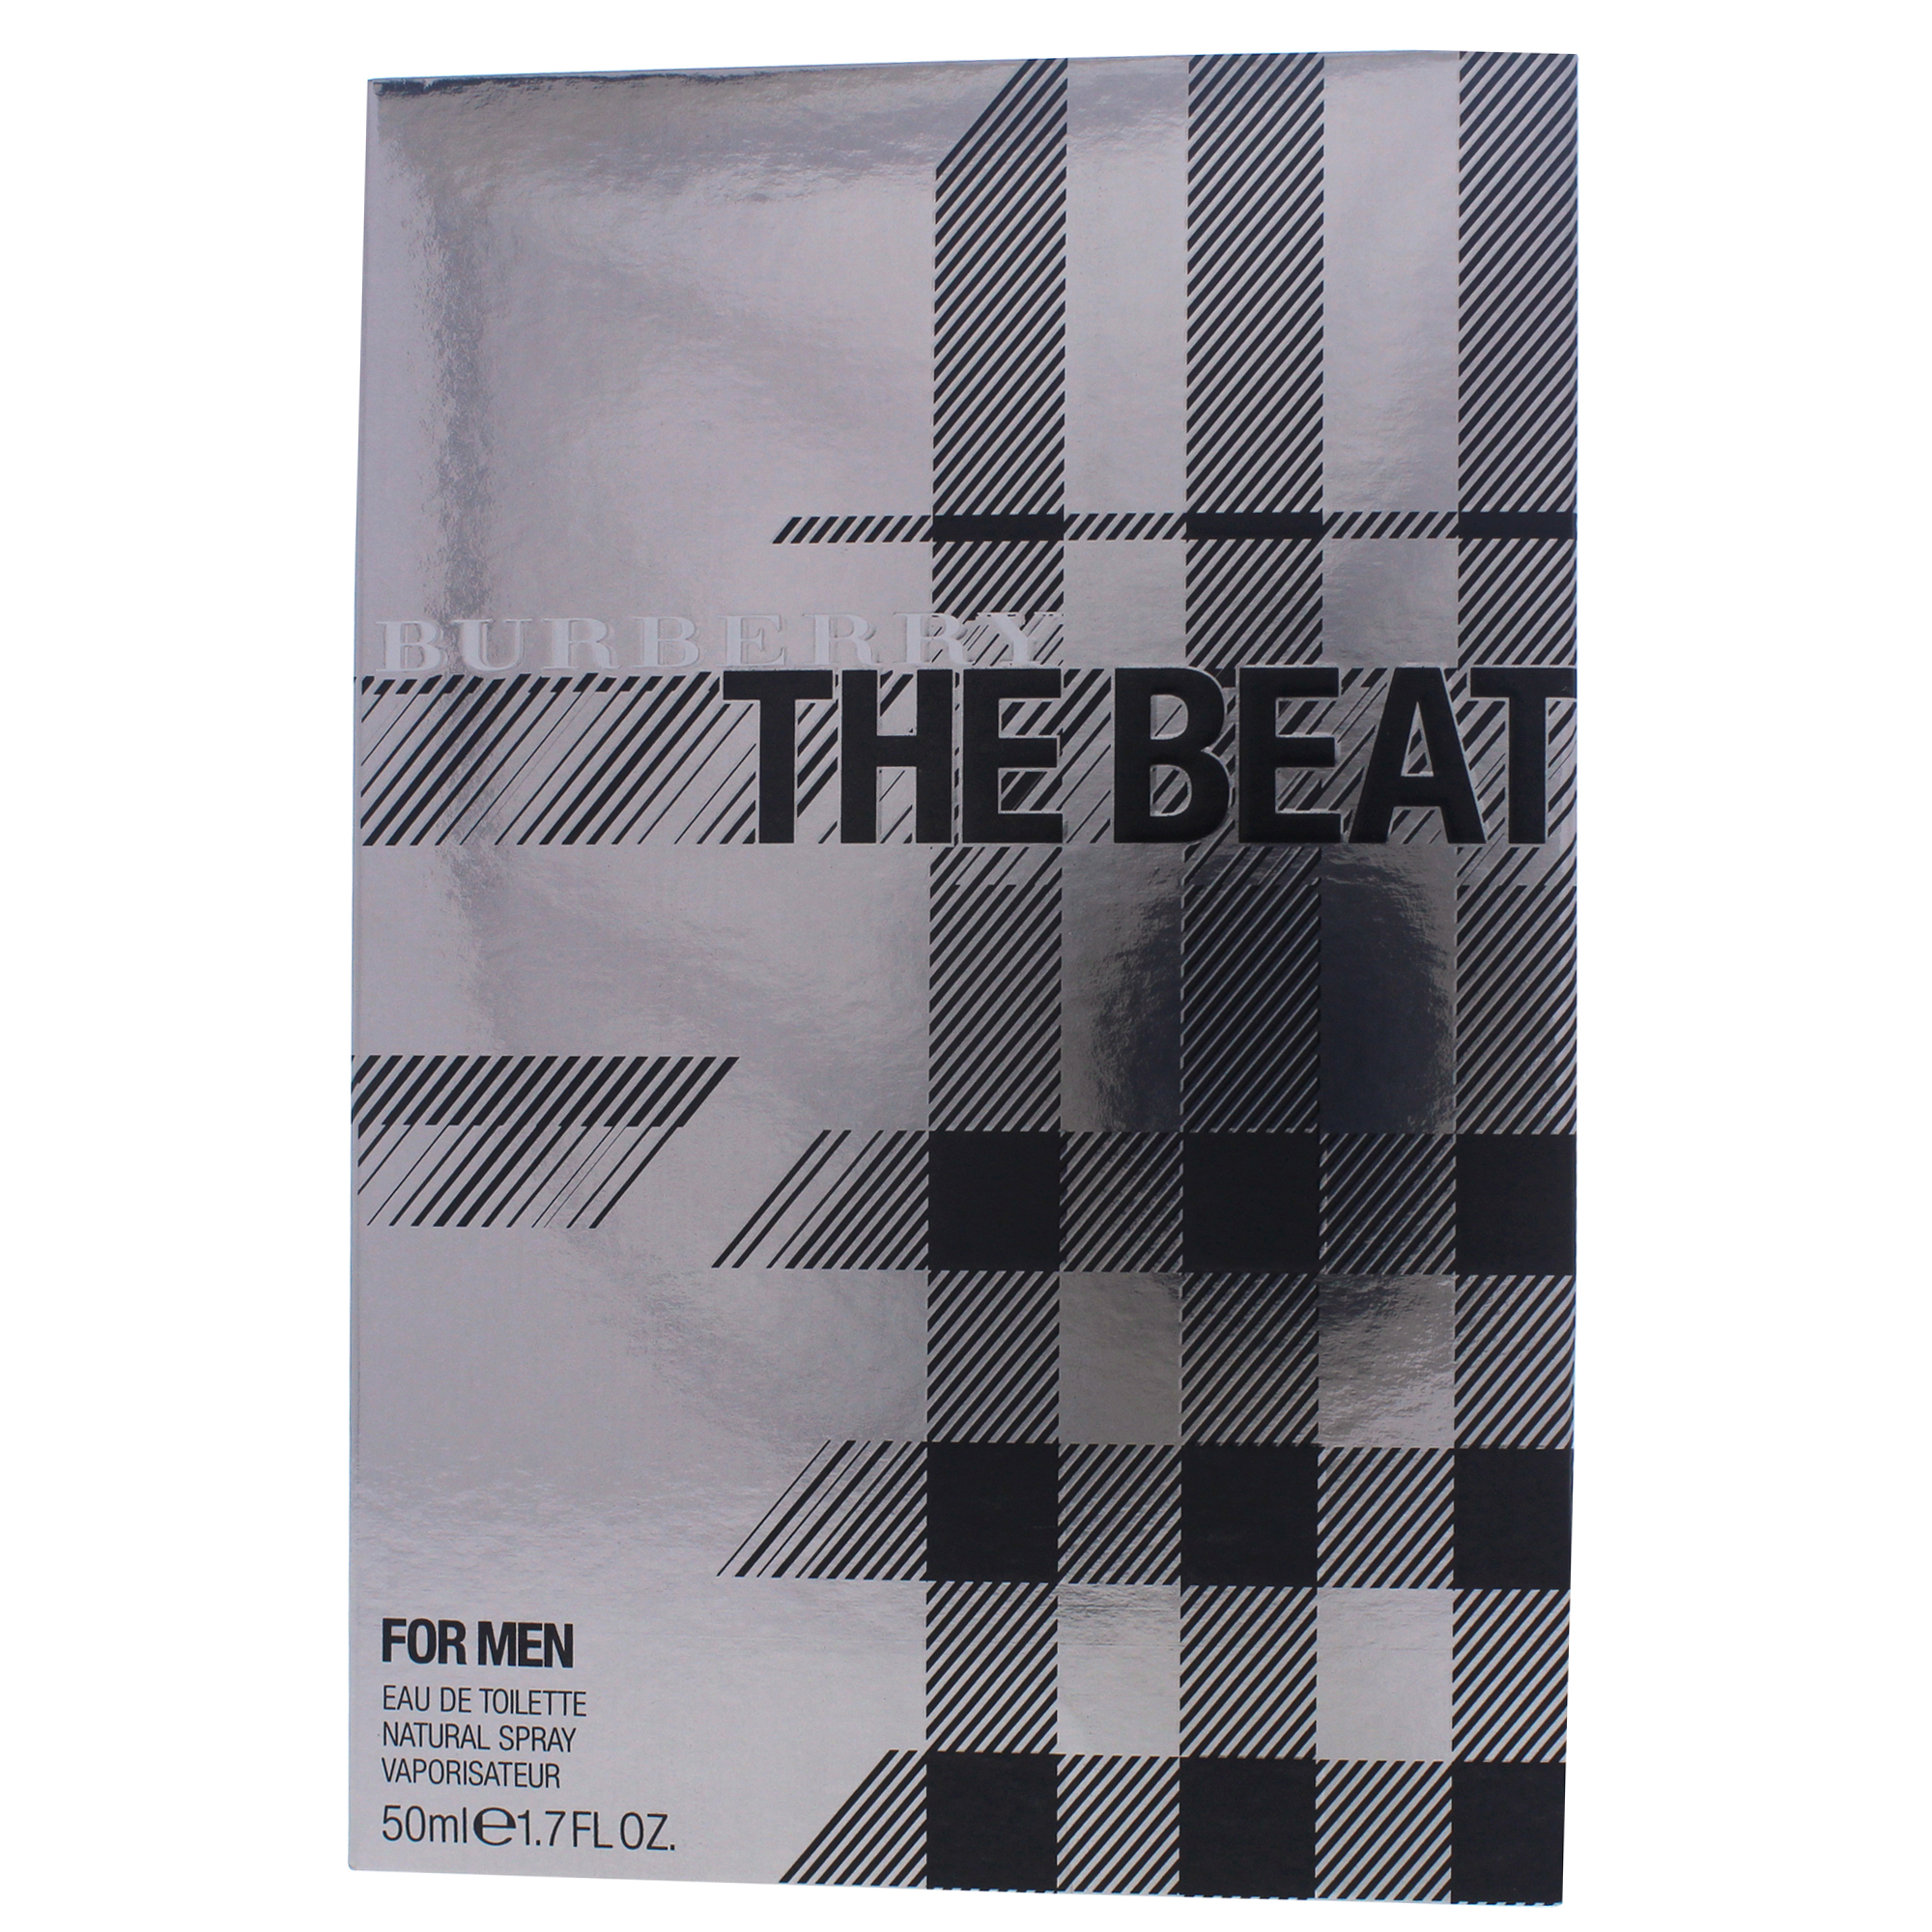 Burberry The Beat, 1.7 oz EDT Spray - image 4 of 5